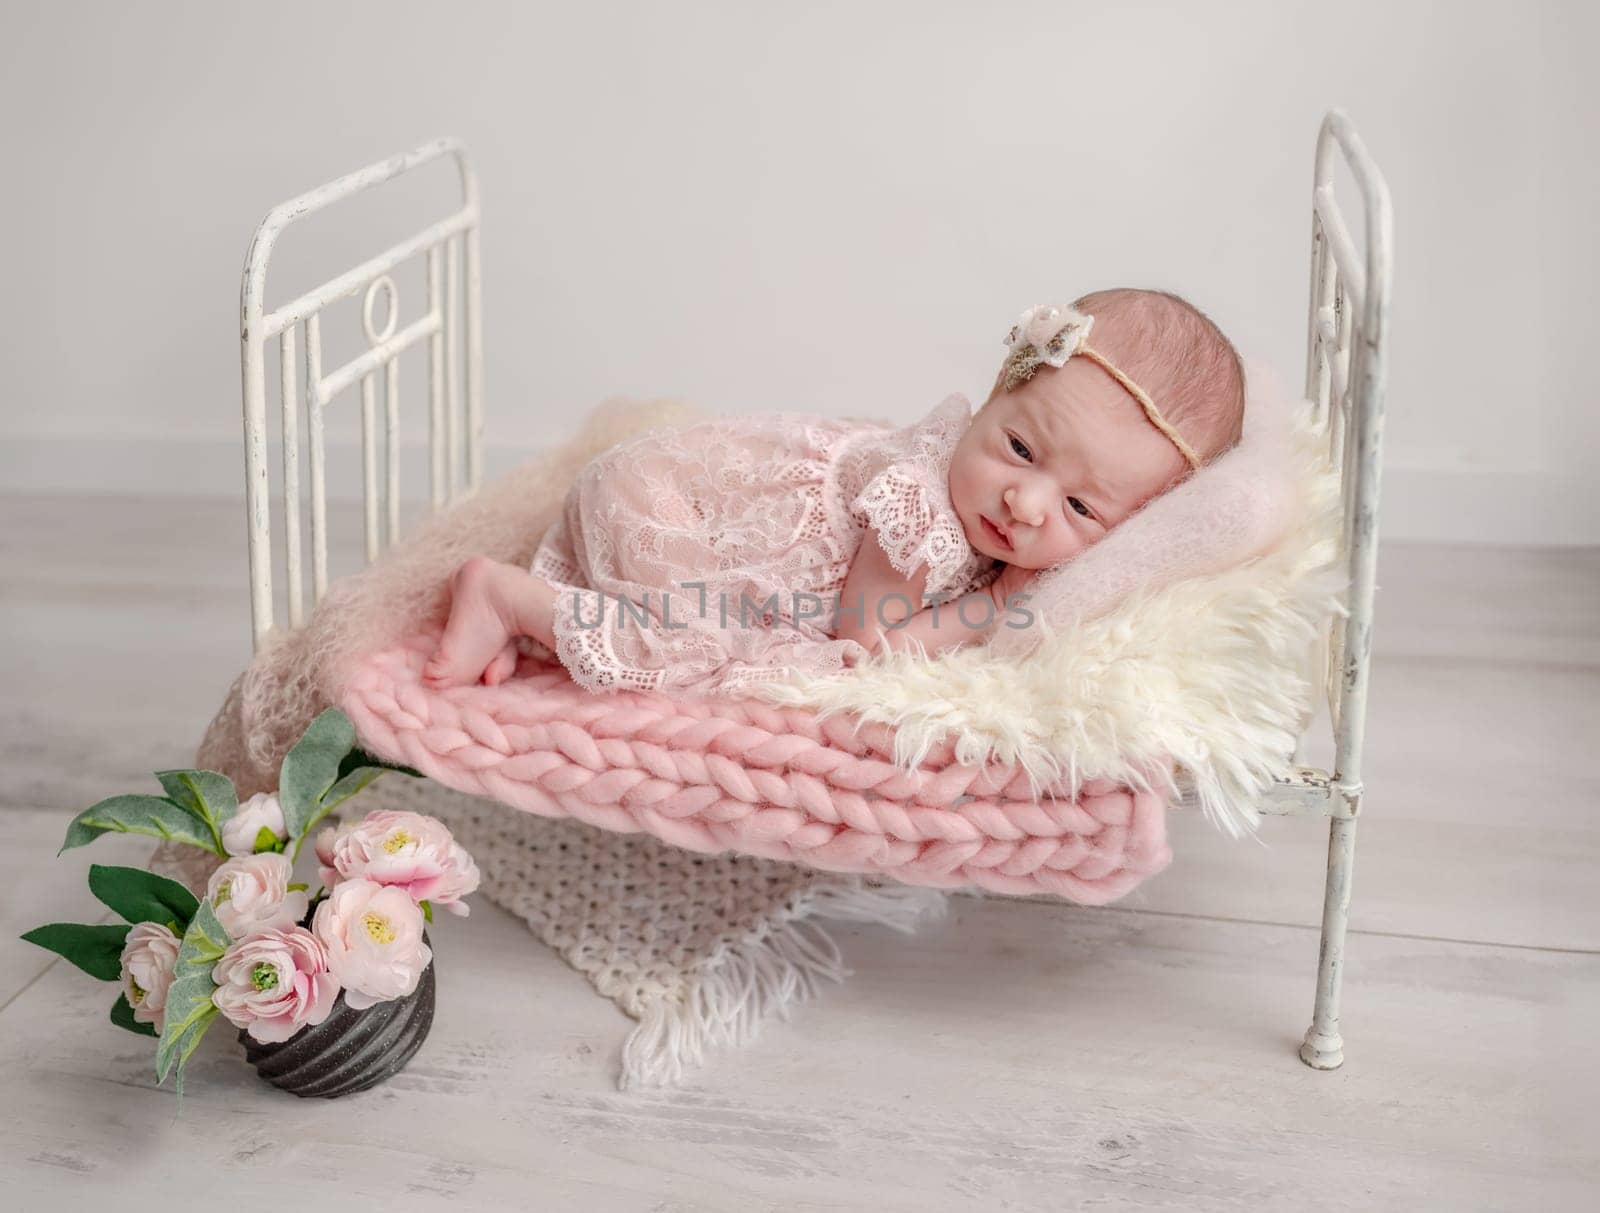 Newborn Girl In Lace Dress Sleeps In Tiny Bed by tan4ikk1